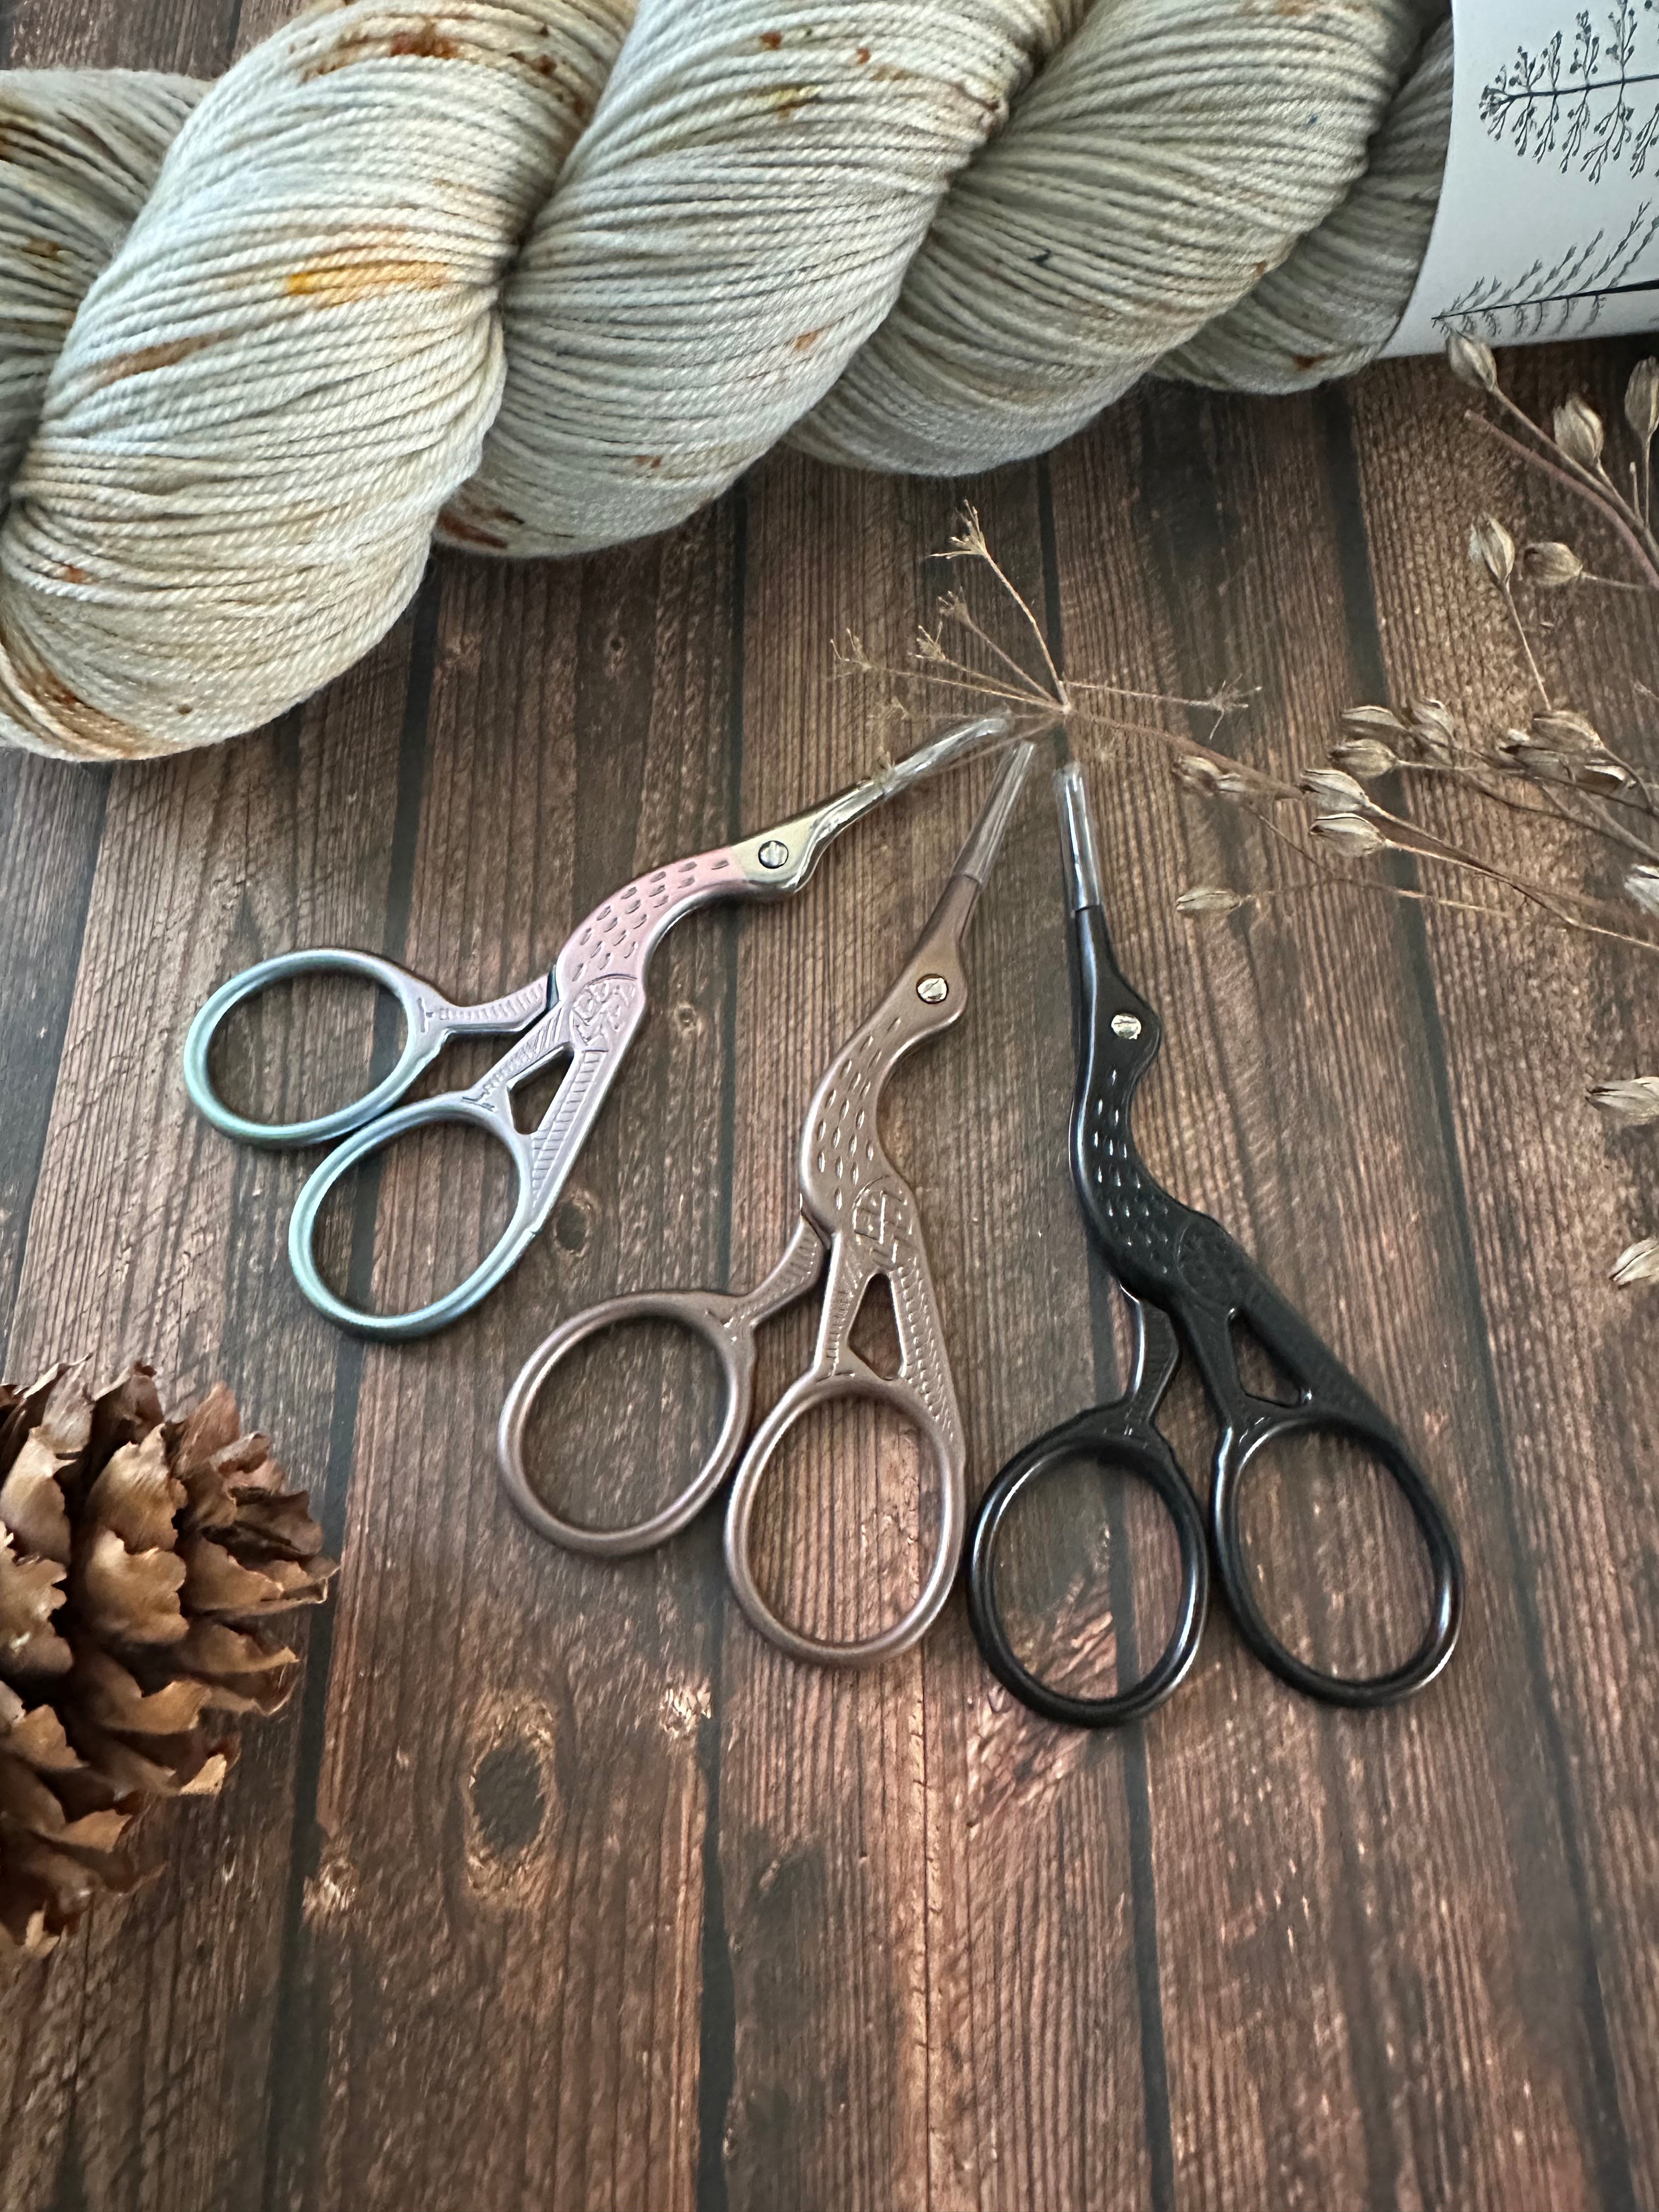 Embroidery scissors - stork